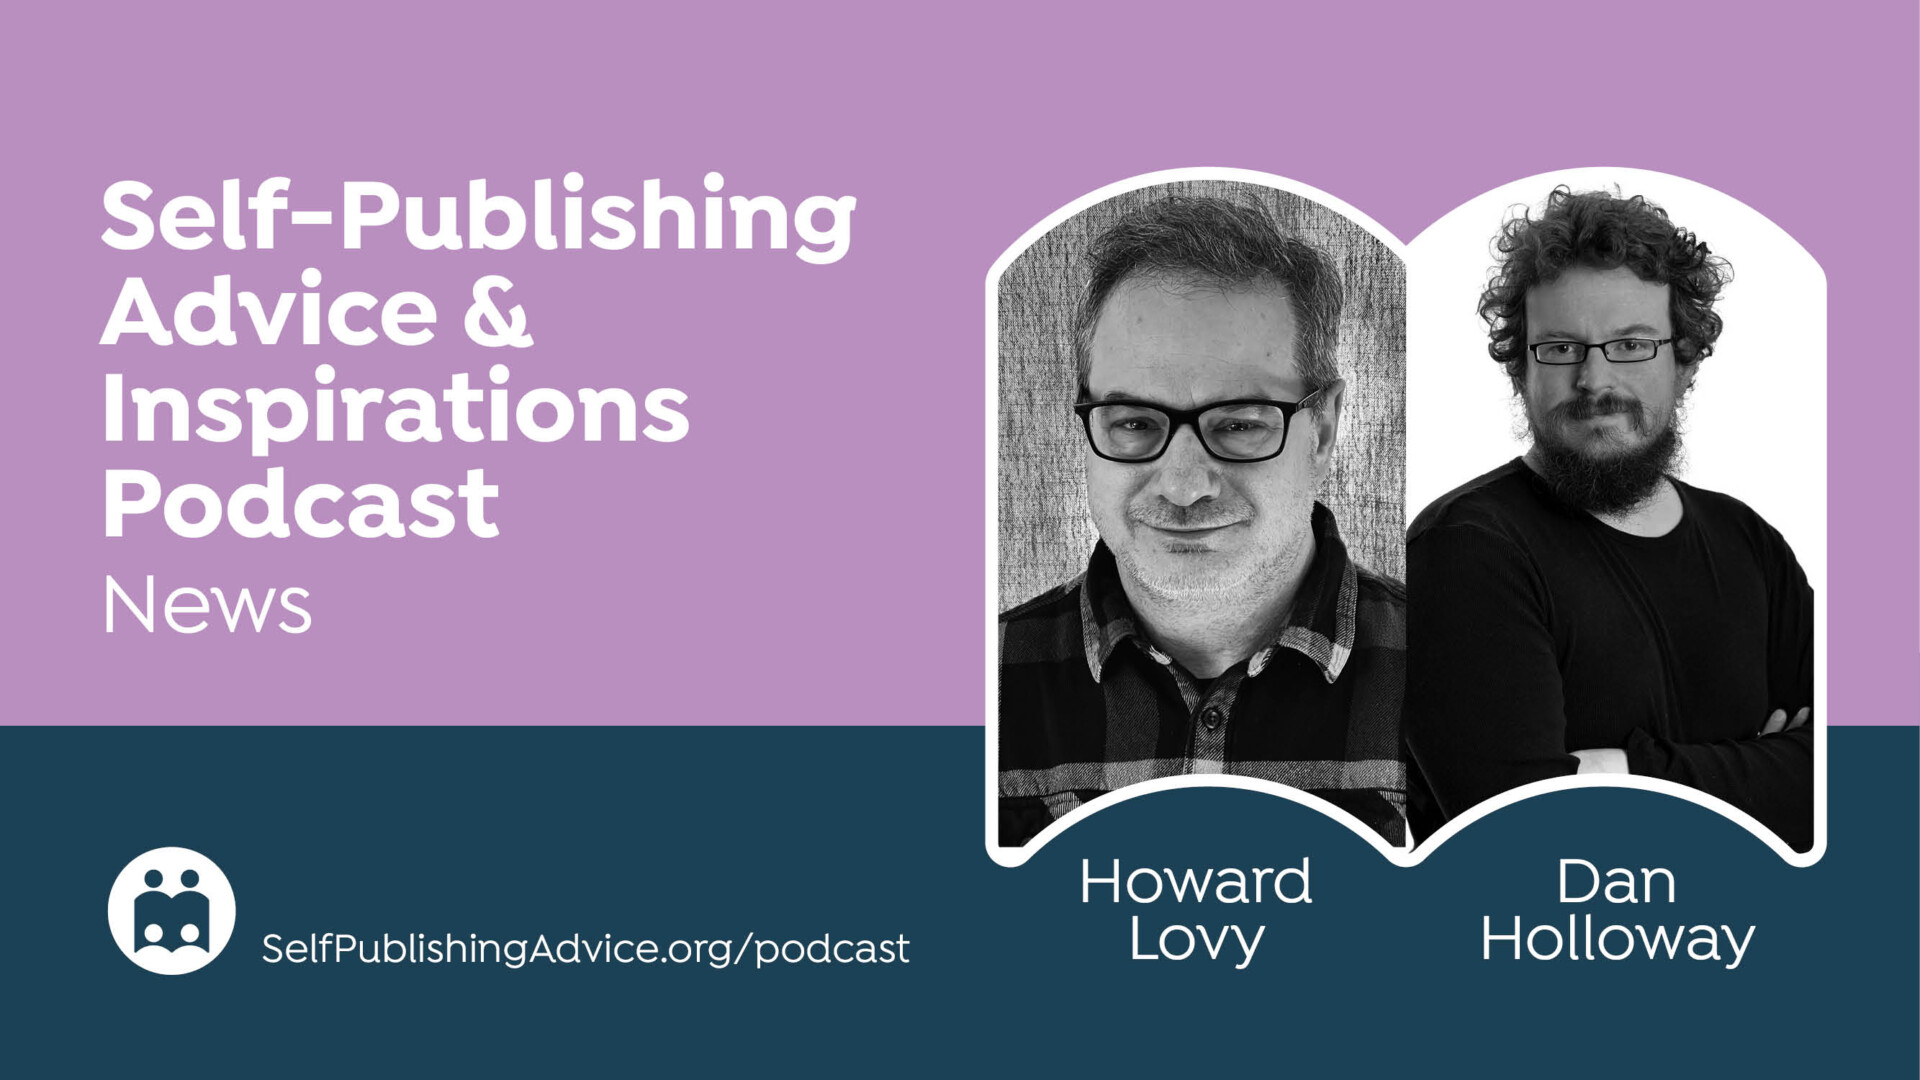 It’s Authors Vs. OpenAI: Self-Publishing News Podcast With Dan Holloway And Howard Lovy